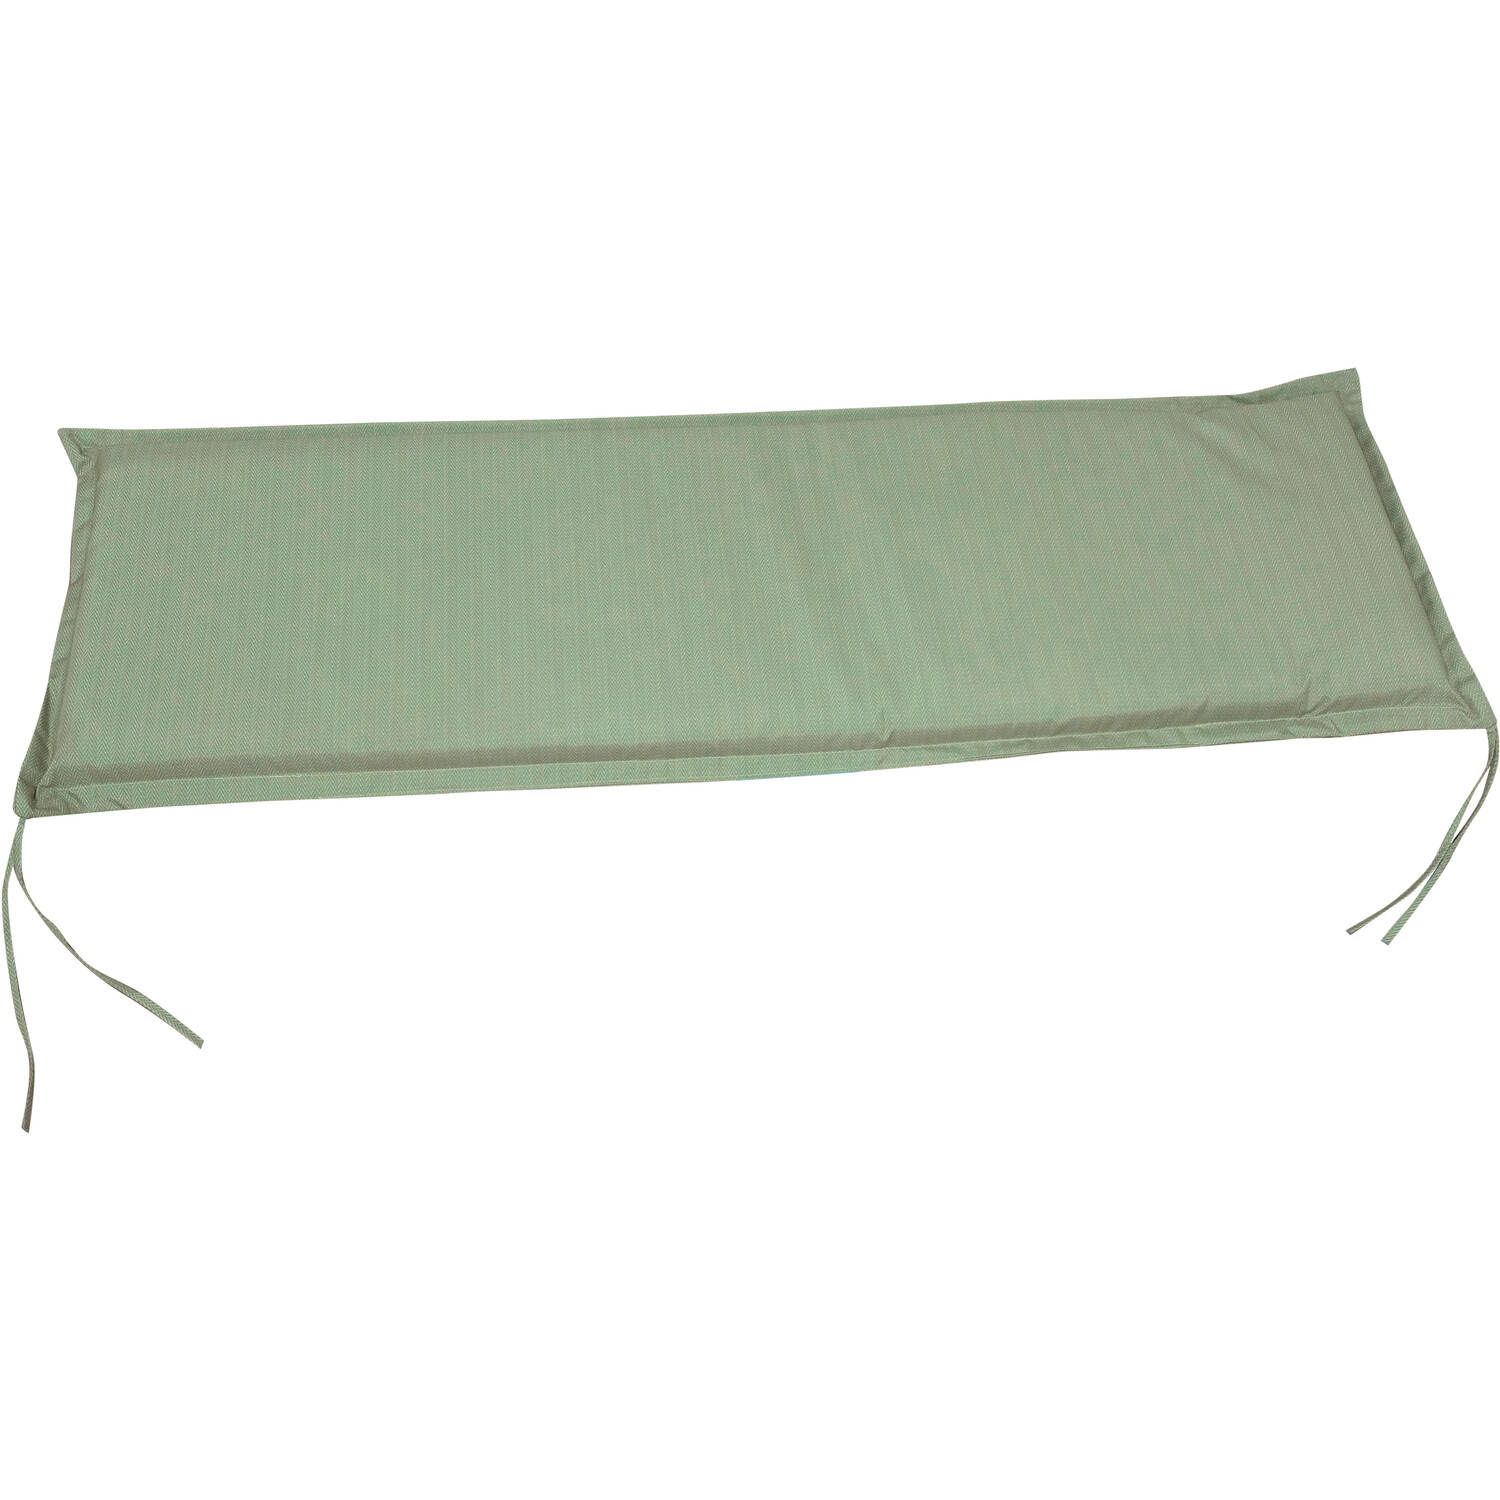 Malay Bench Cushion - Green / 3 Seater Bench Image